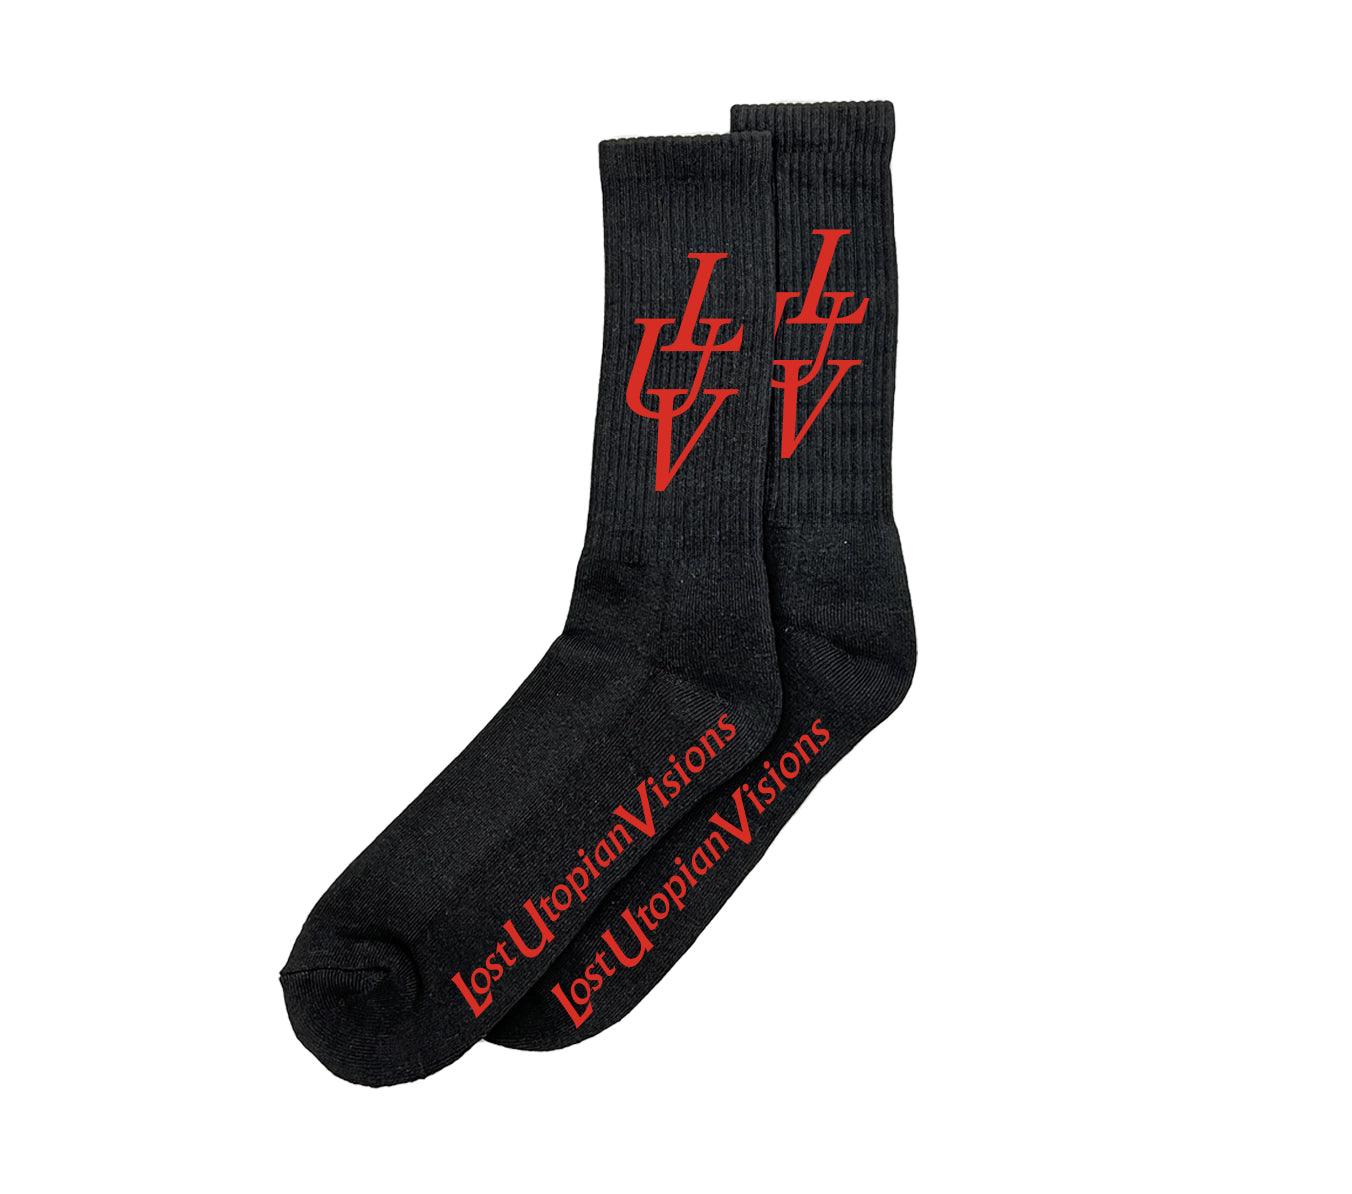 Lost Utopian Visions LUV Paris Socks - Black / Red - OS -